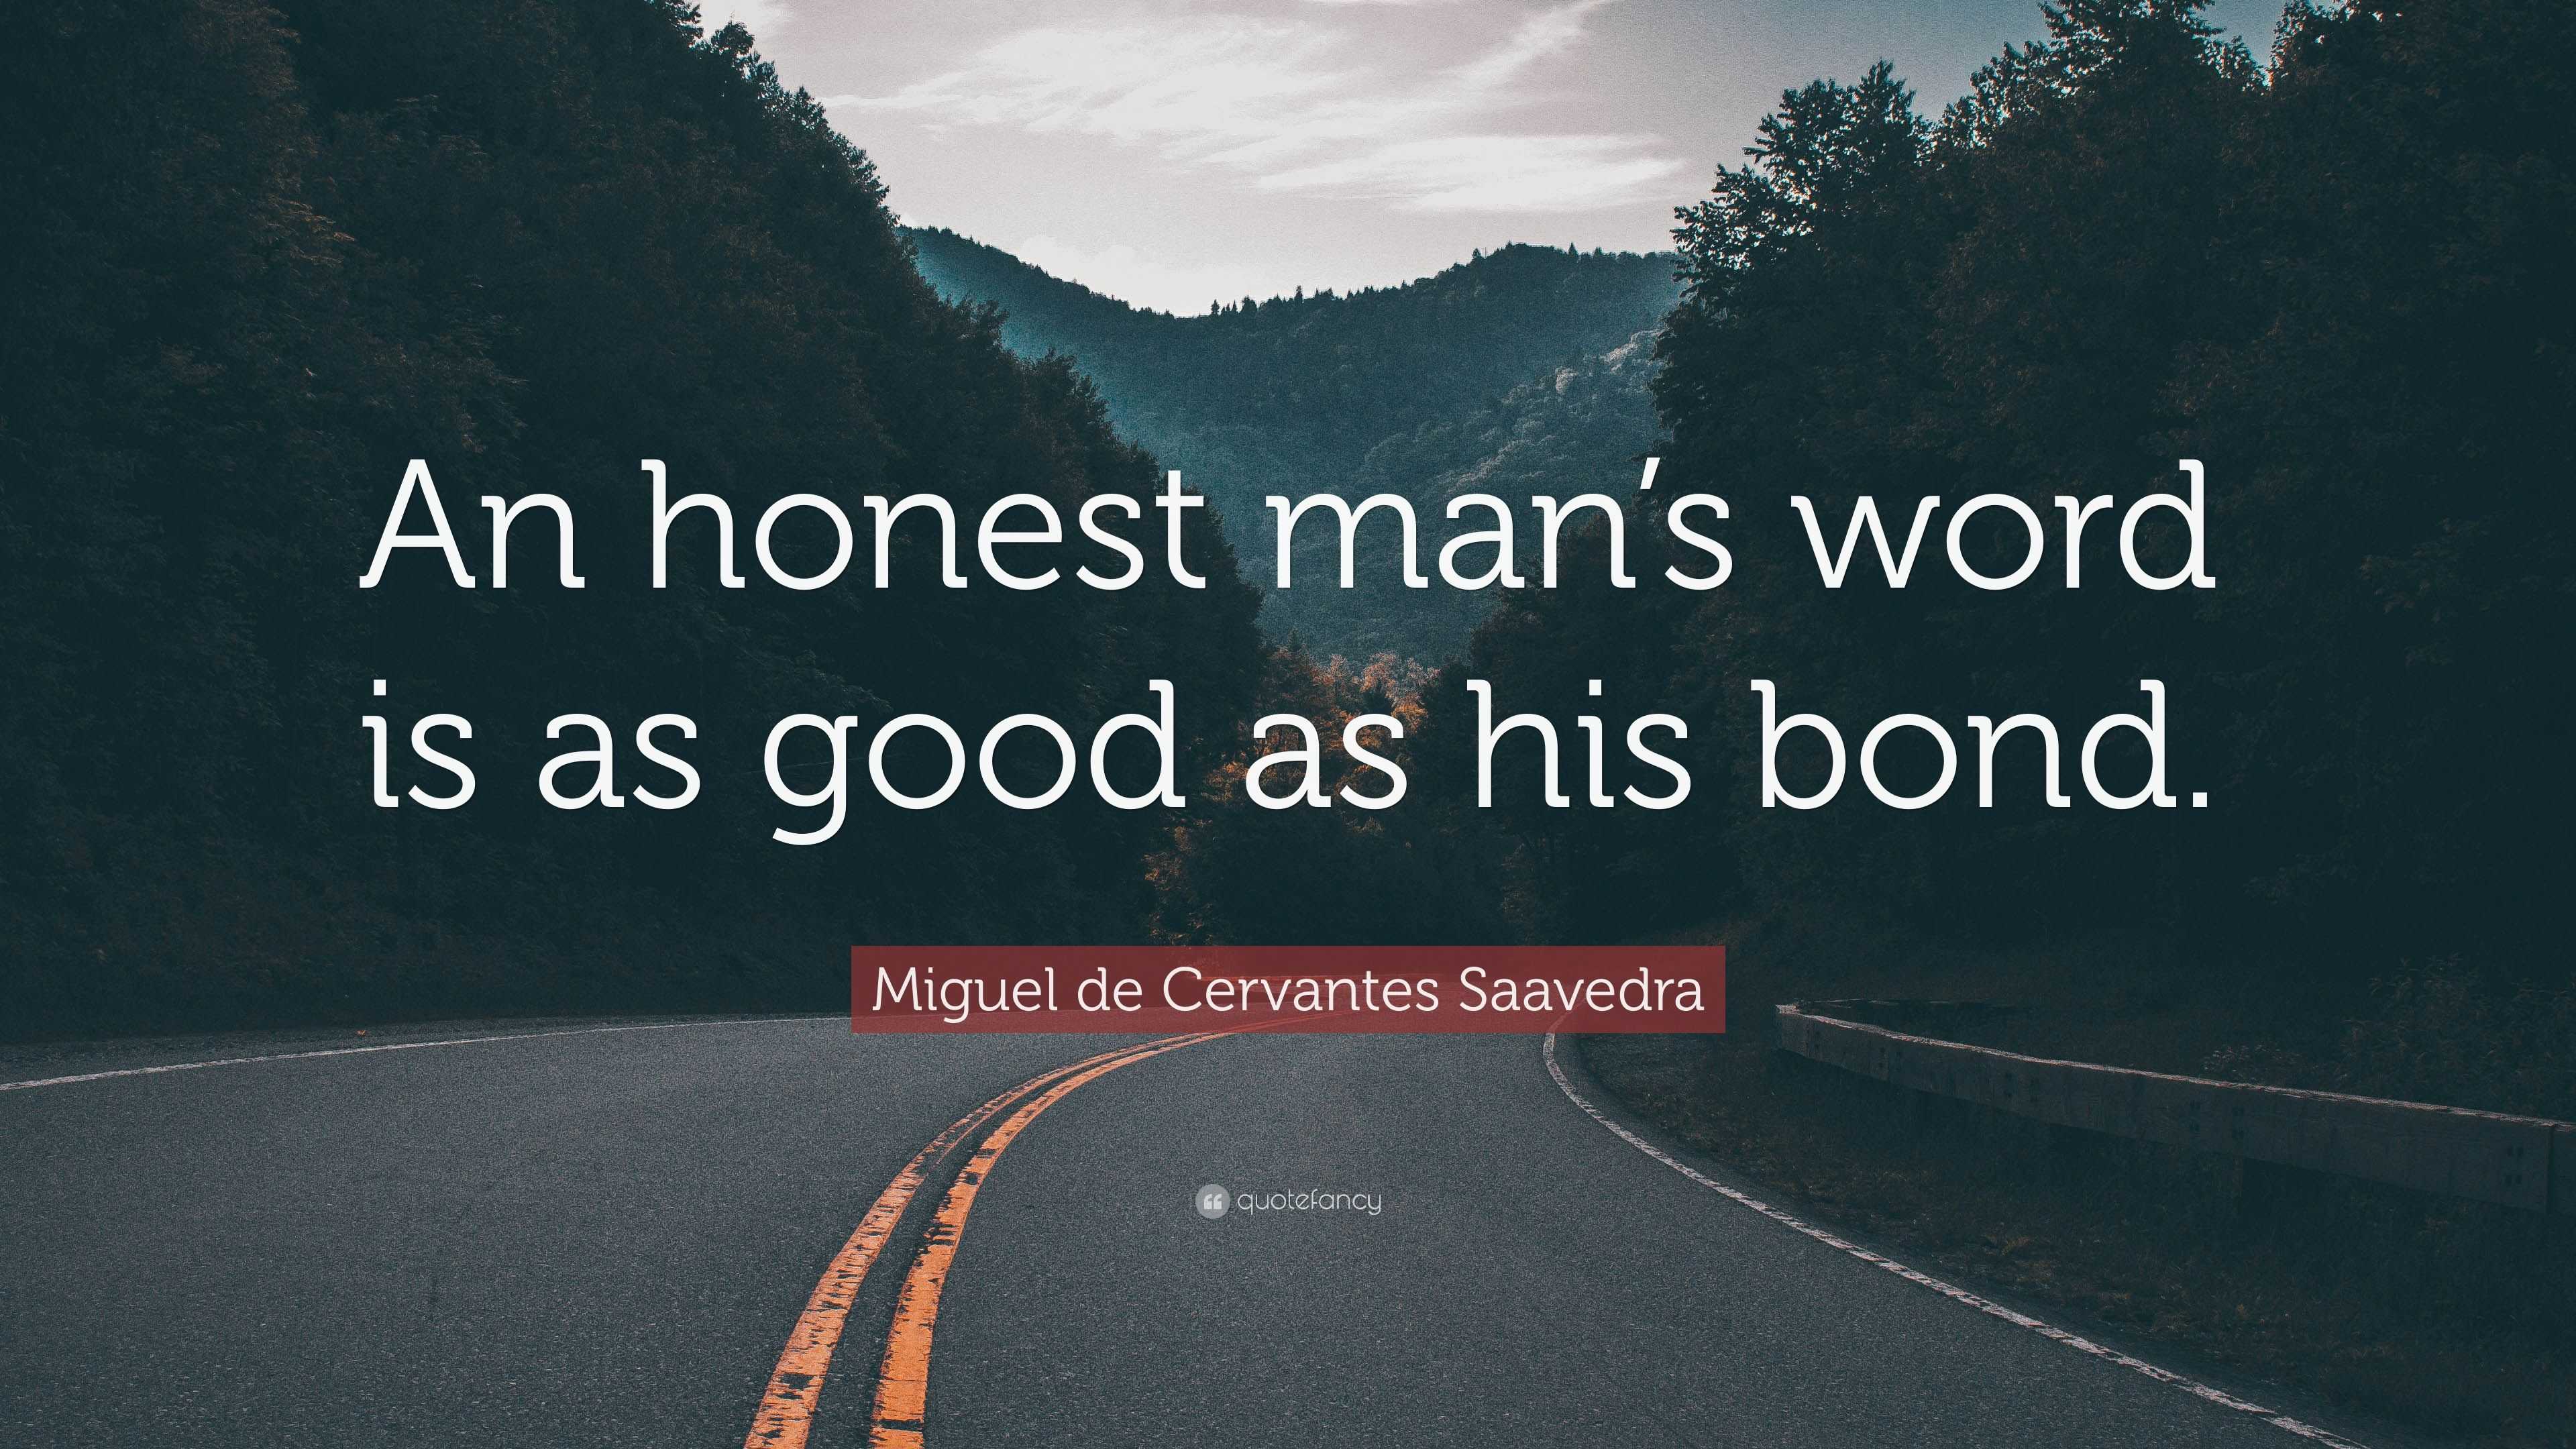 Miguel De Cervantes Saavedra Quote An Honest Man S Word Is As Good As His Bond